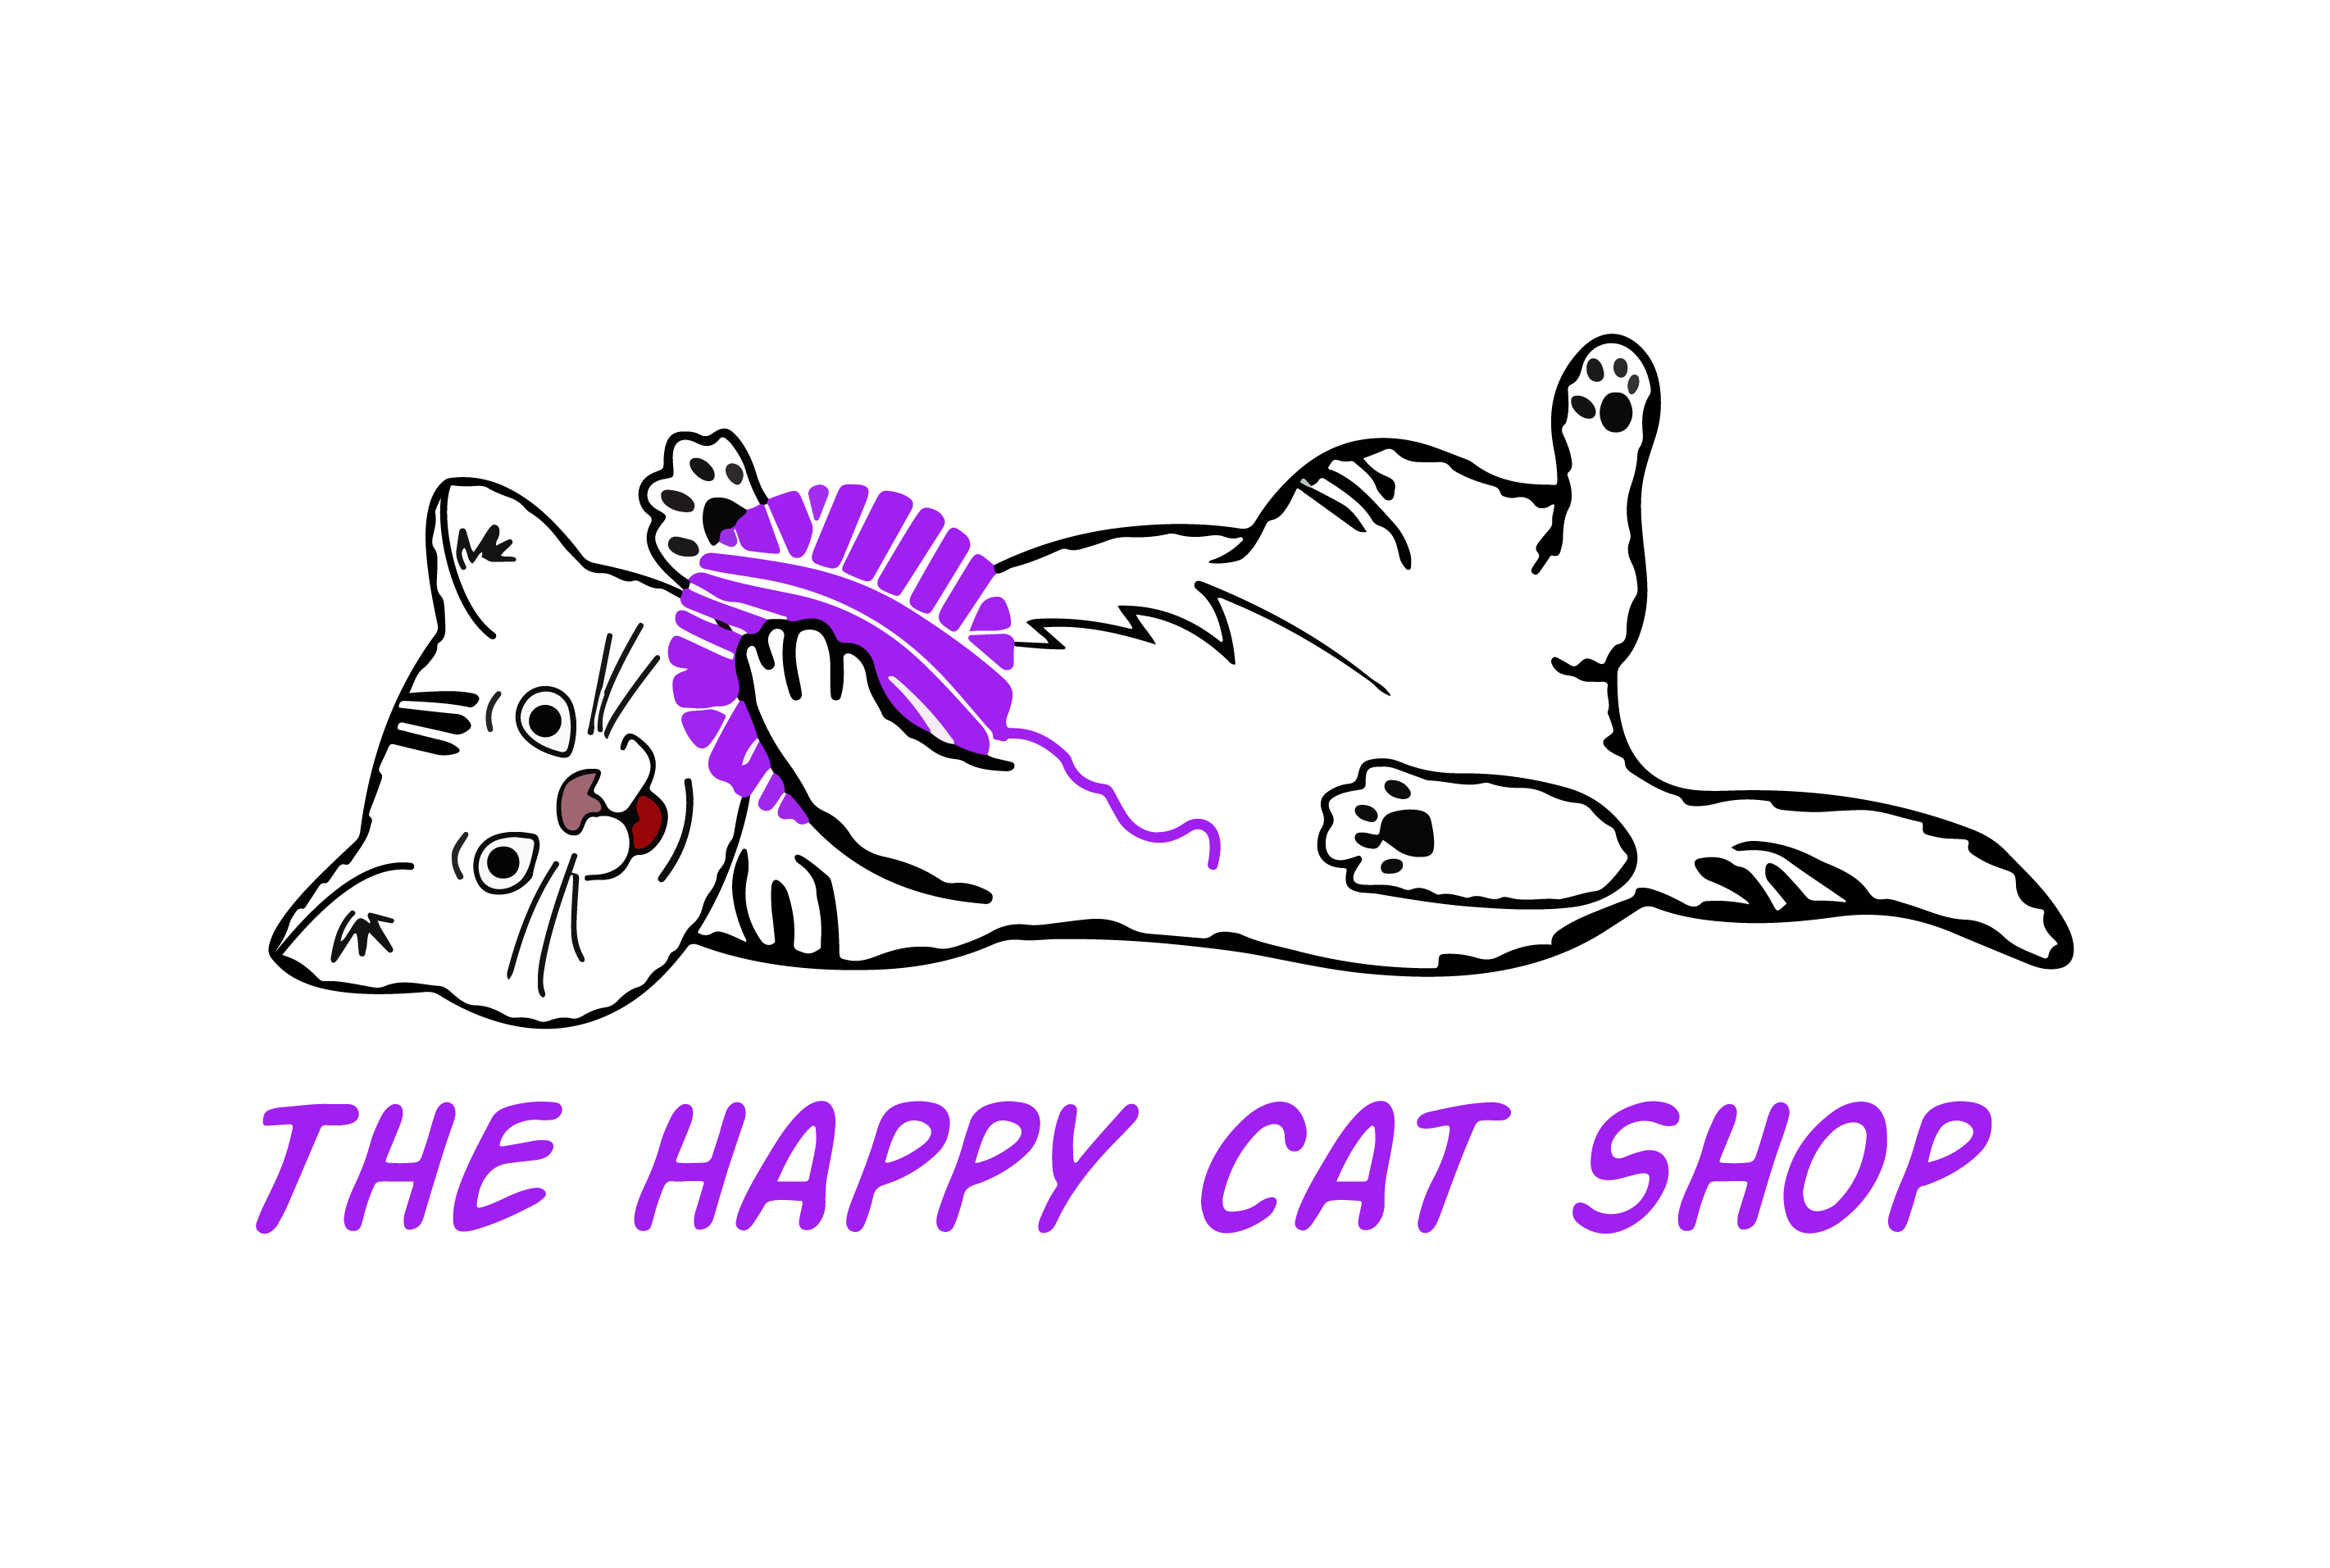 The happy cat shop